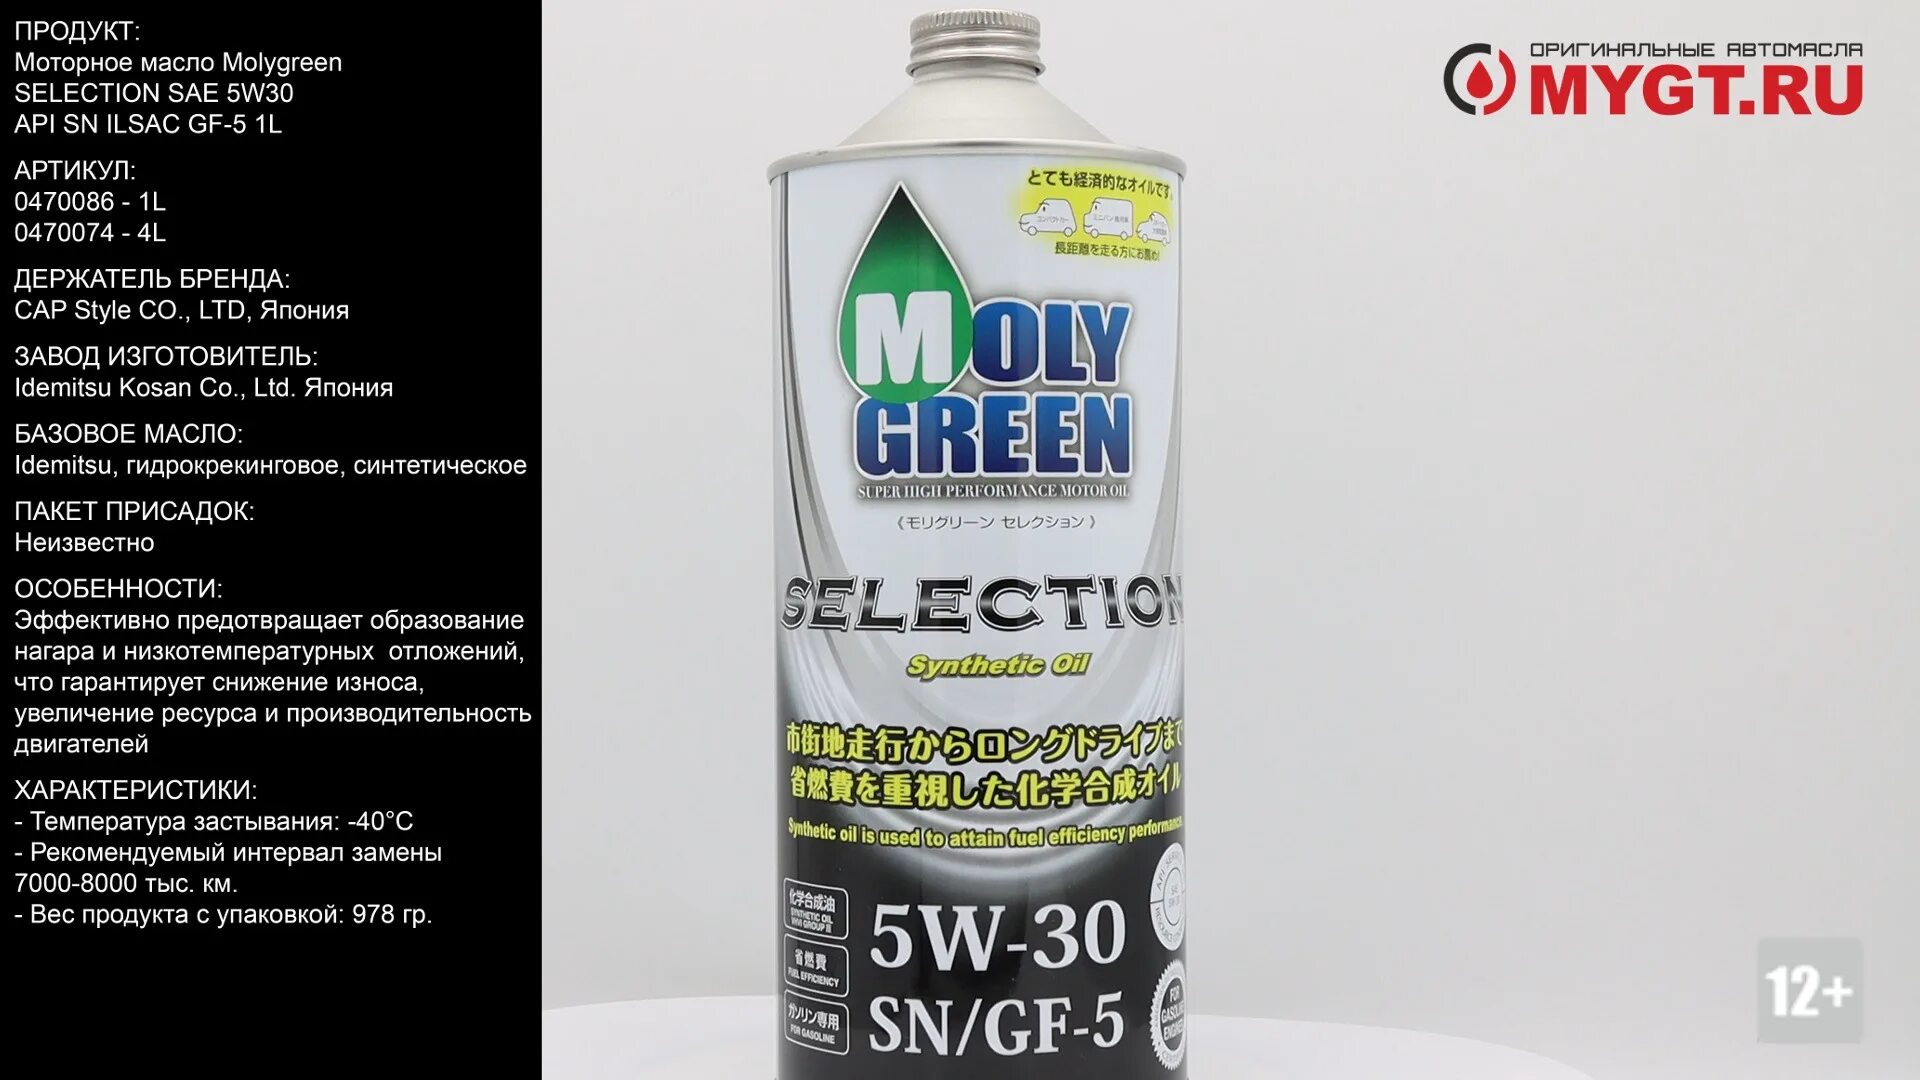 Moly Green 5w30 selection. Масло Moly Green 5w30 selection. Moly Green selection 5w30 4л 0470074. Moly Green Premium Black SAE 5w-30 API SN ILSAC gf-5 4l 0470022. Масла api sn ilsac gf 5